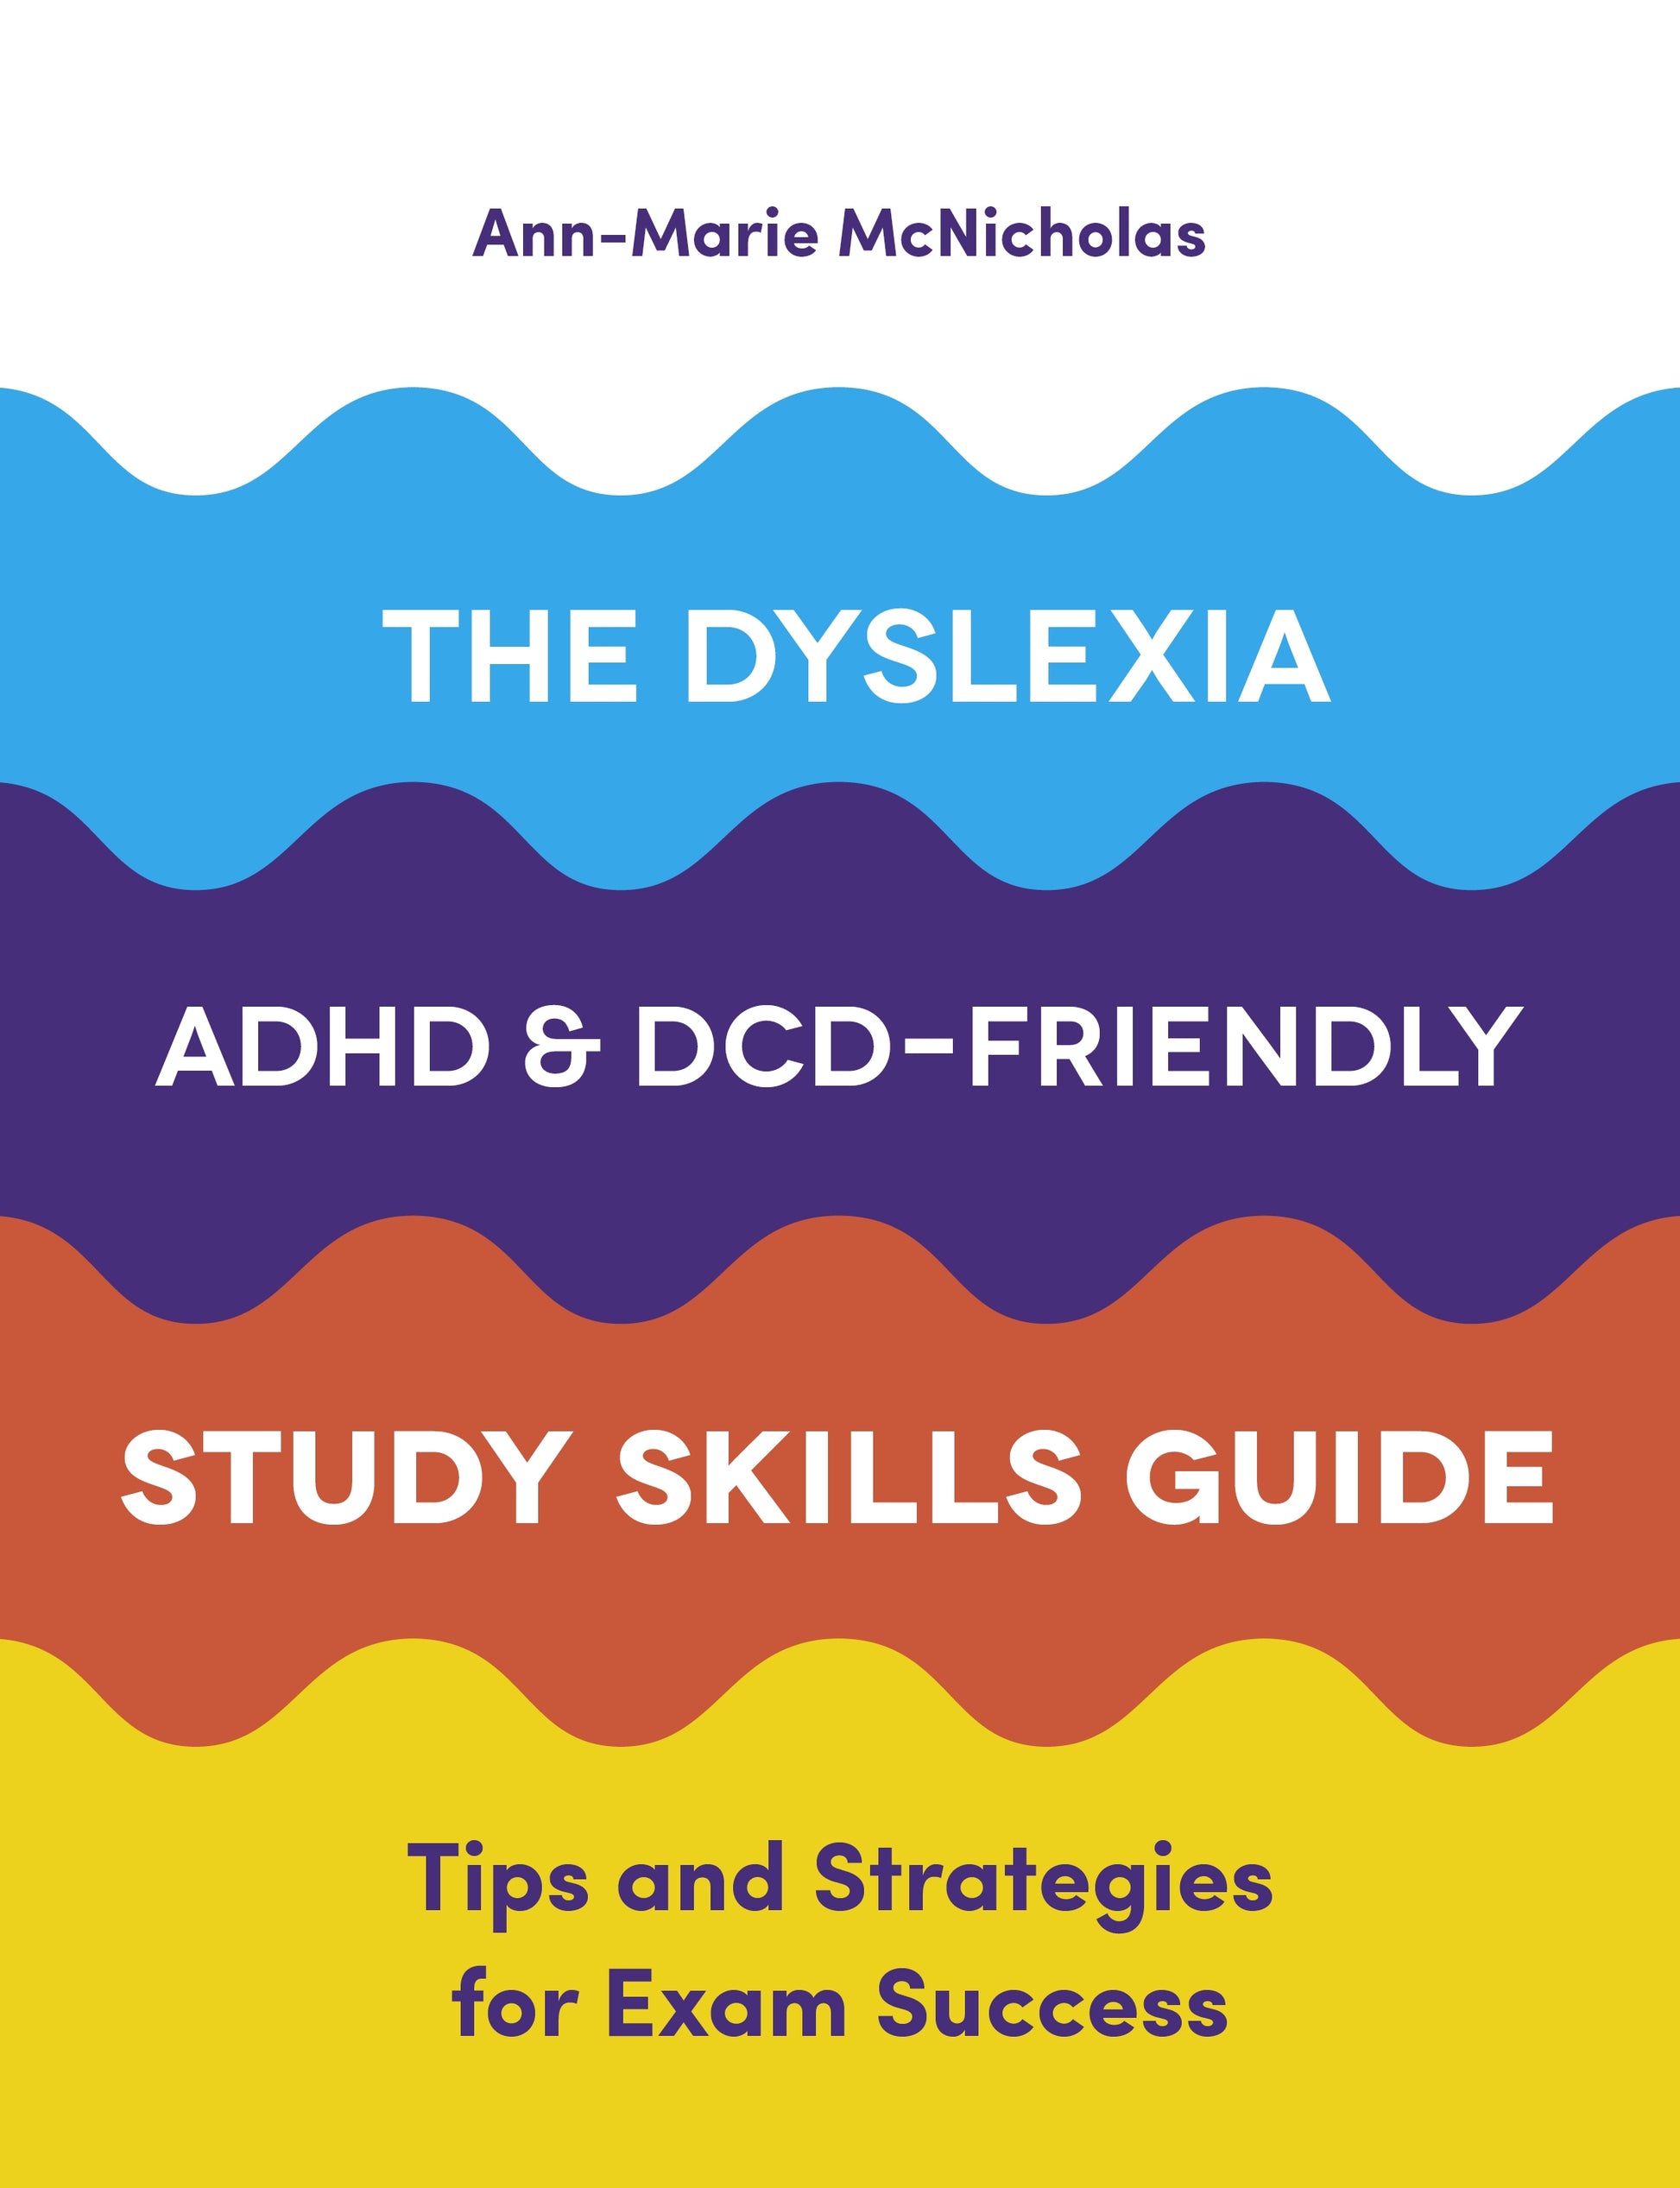 The Dyslexia, ADHD, and DCD-Friendly Study Skills Guide by Ann-Marie McNicholas